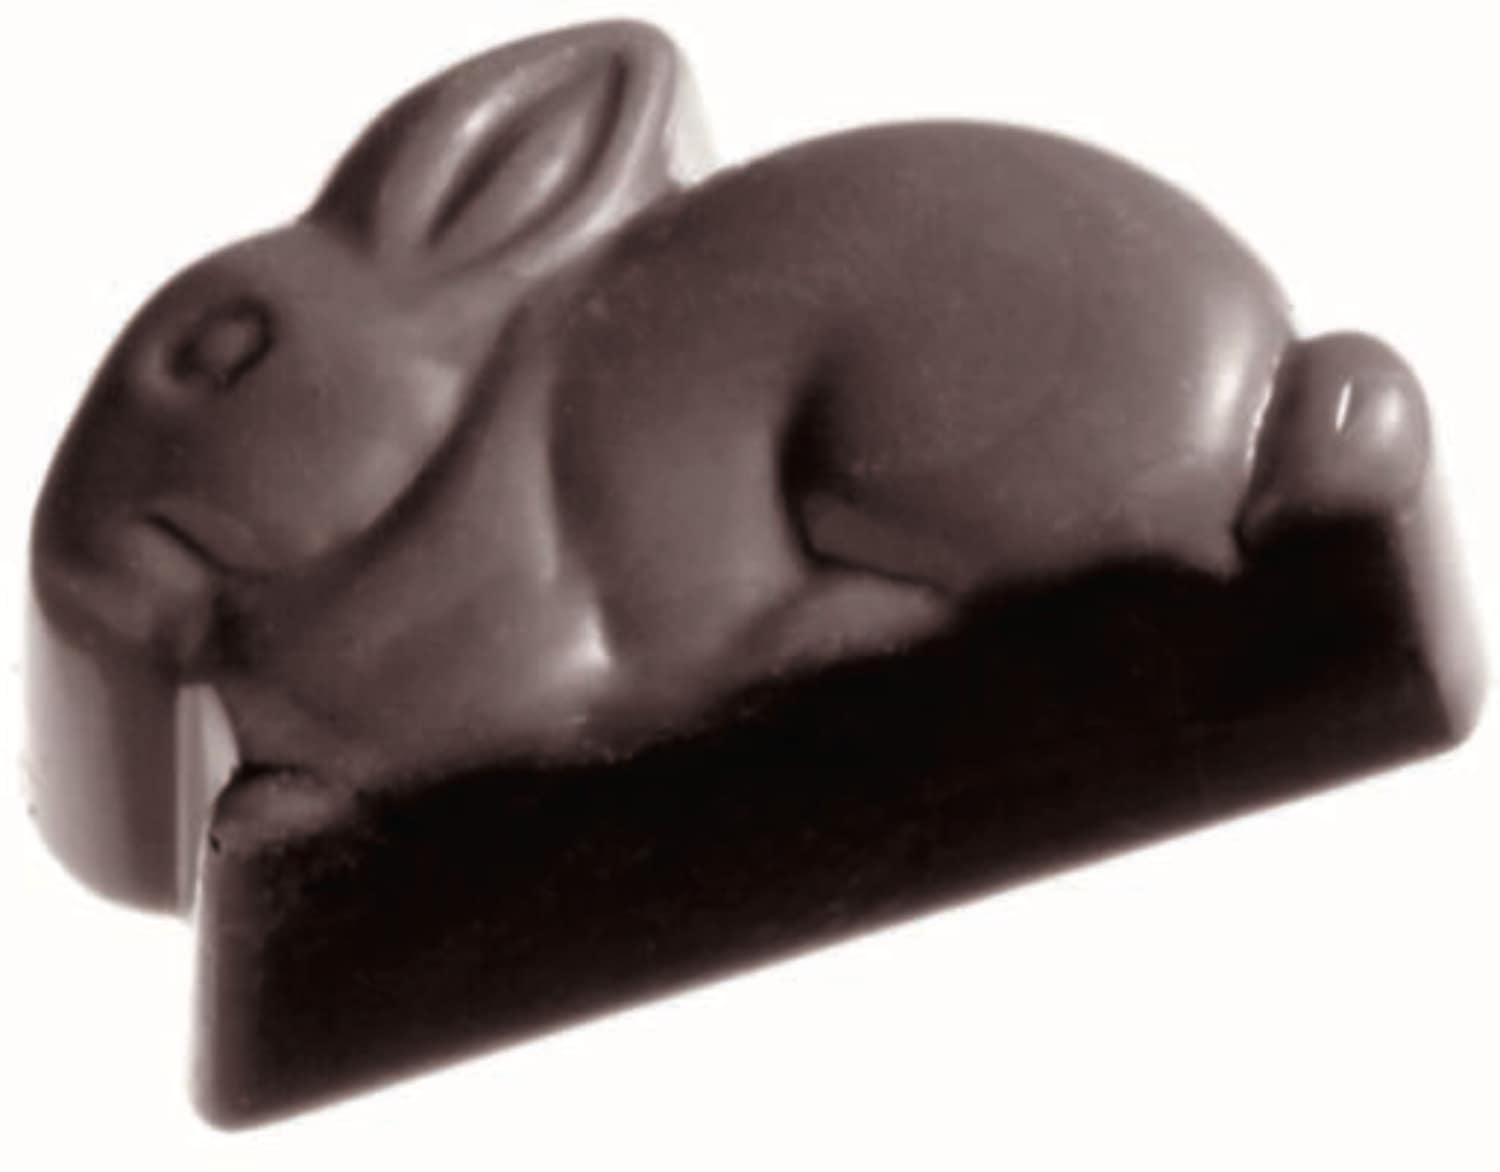 Chocolate mould "rabbit" 421362